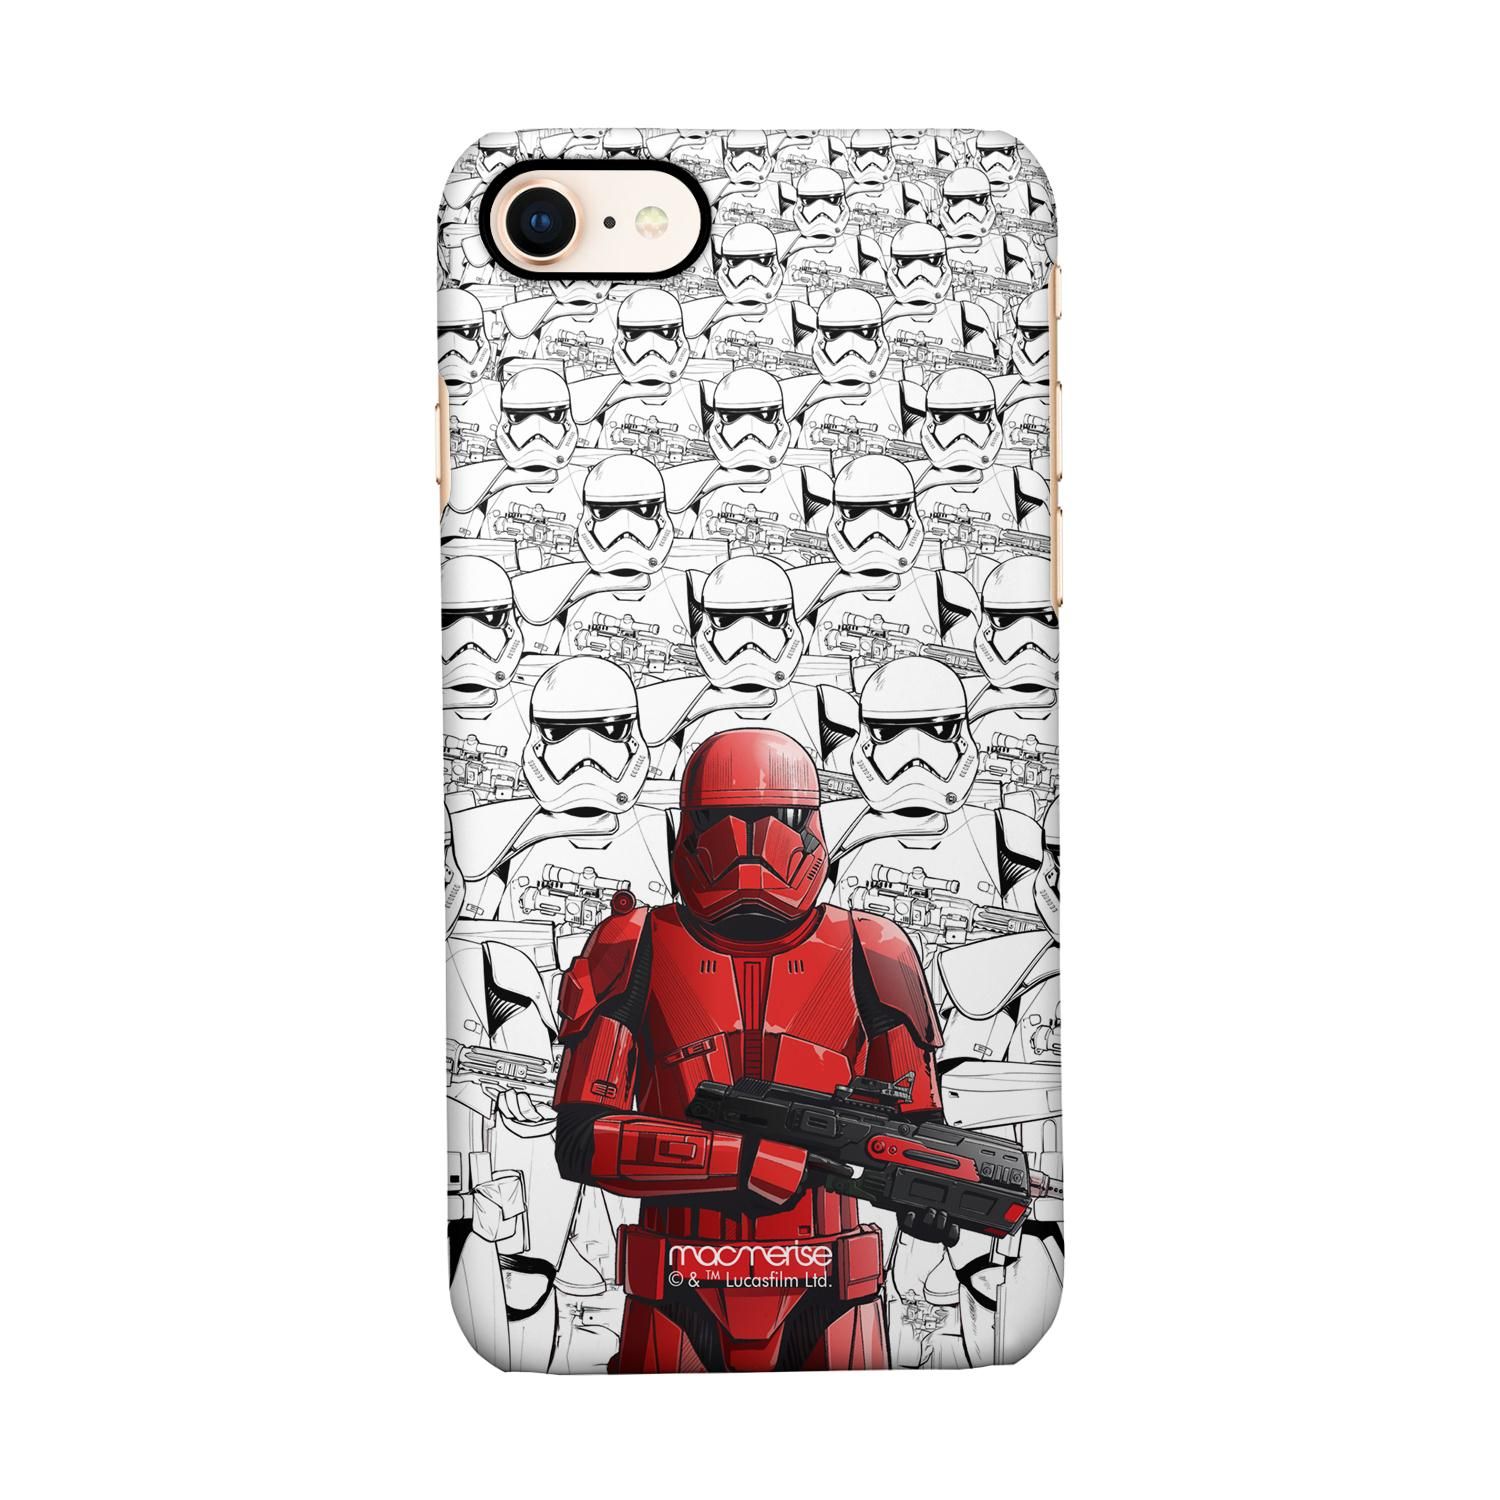 Buy Sith Troopers - Sleek Phone Case for iPhone 7 Online